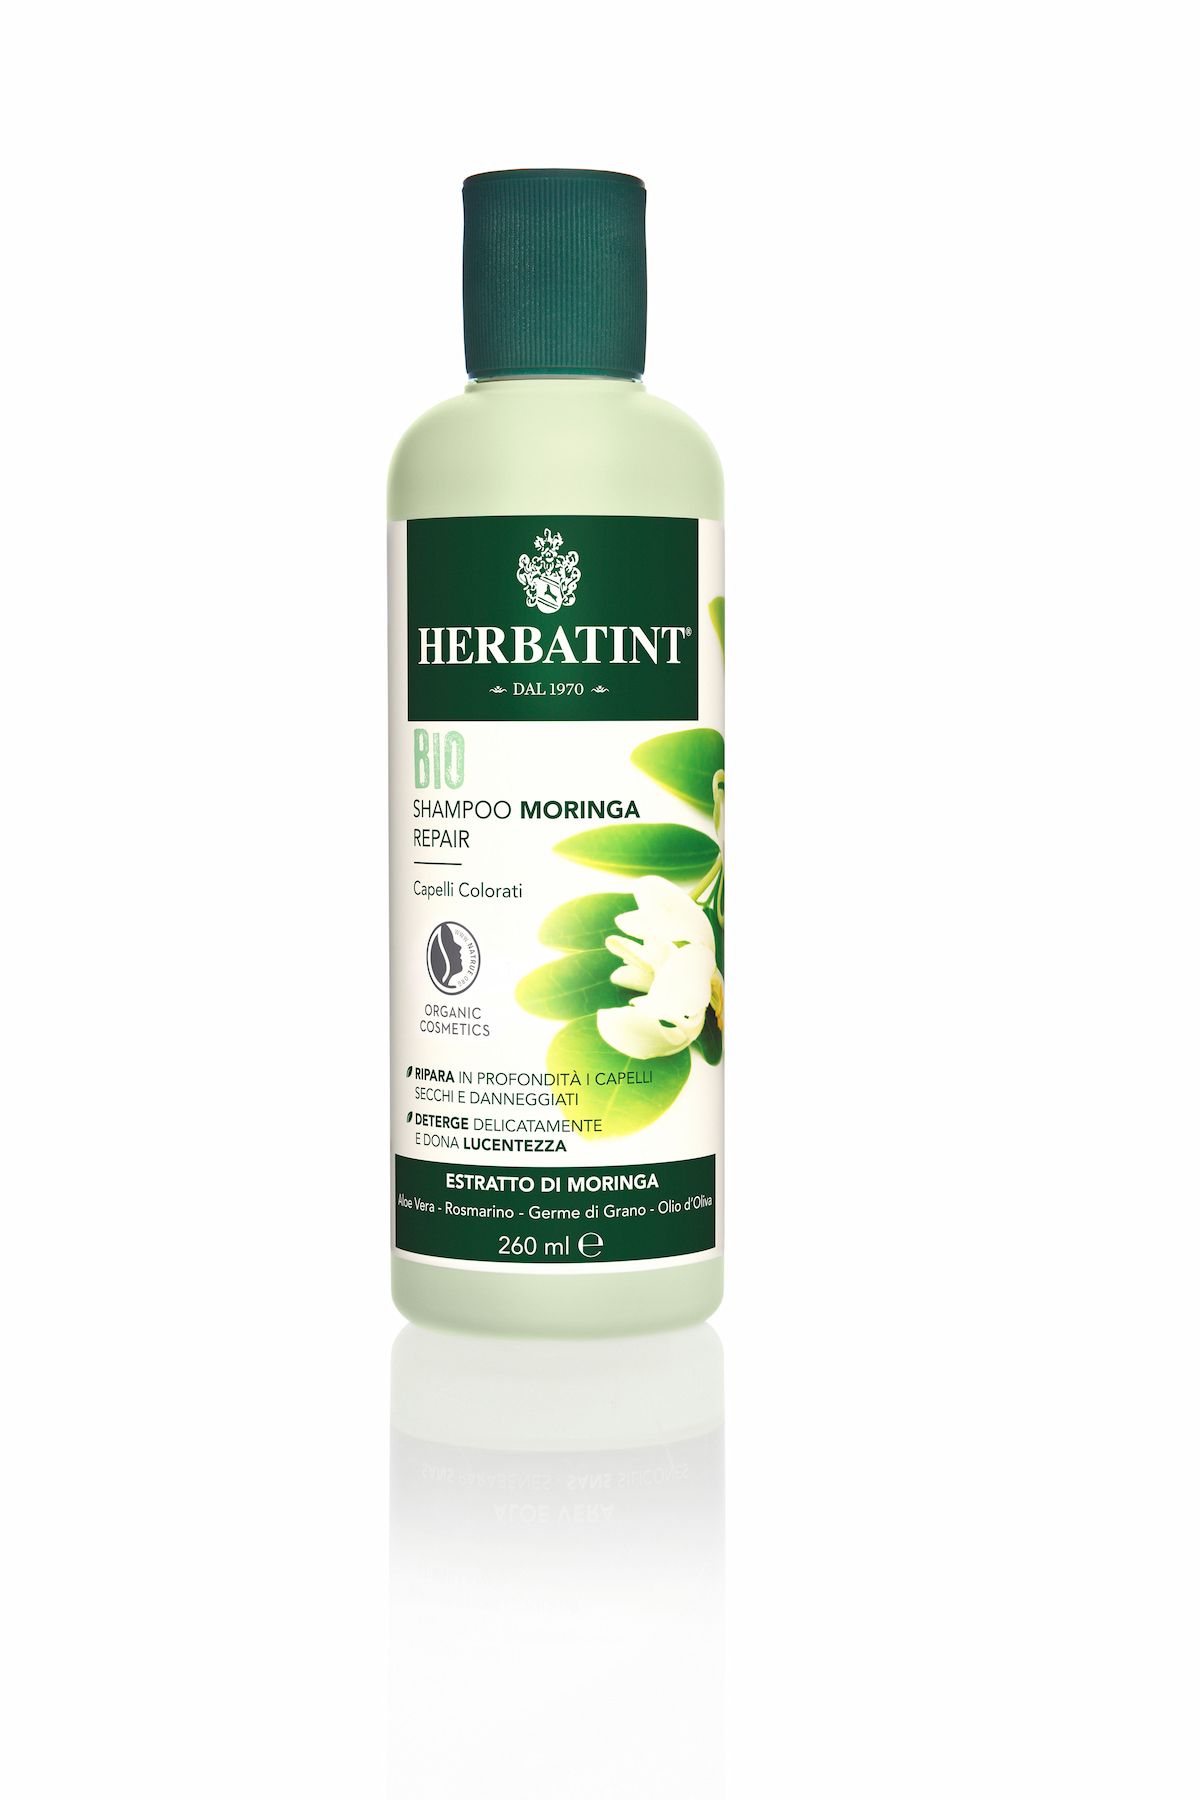 Herbatint Shampoo Moringa Repair 260ml